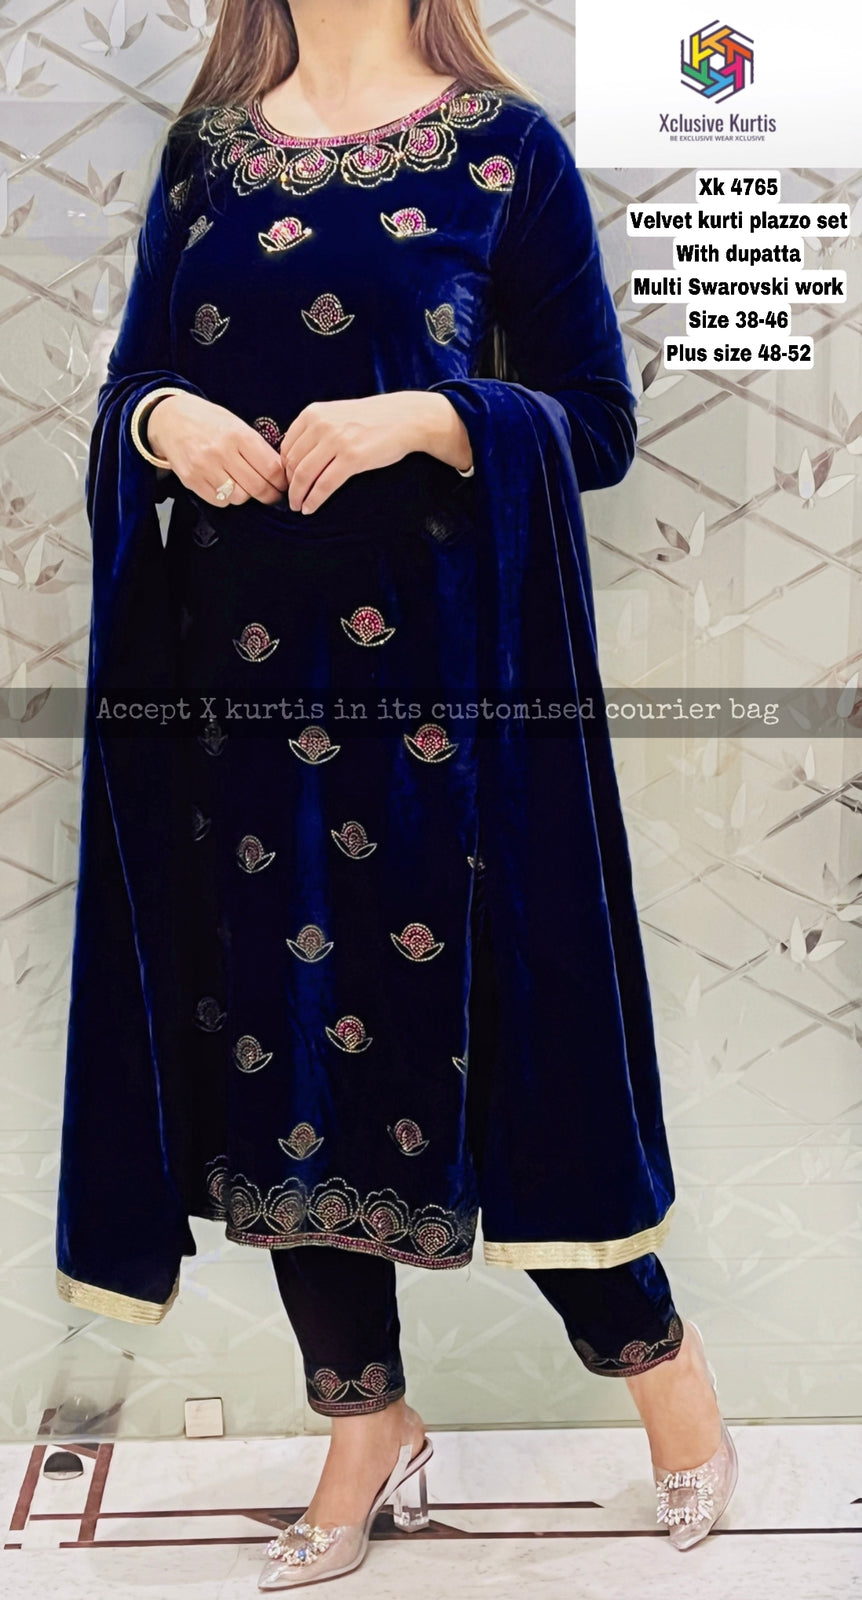 Viscose Velvet With Embroidery Work Kurta Pant Set, Kurti With Pants, कुरती  पैंट सेट - Prathmesh Enterprises, Mumbai | ID: 2849503315173